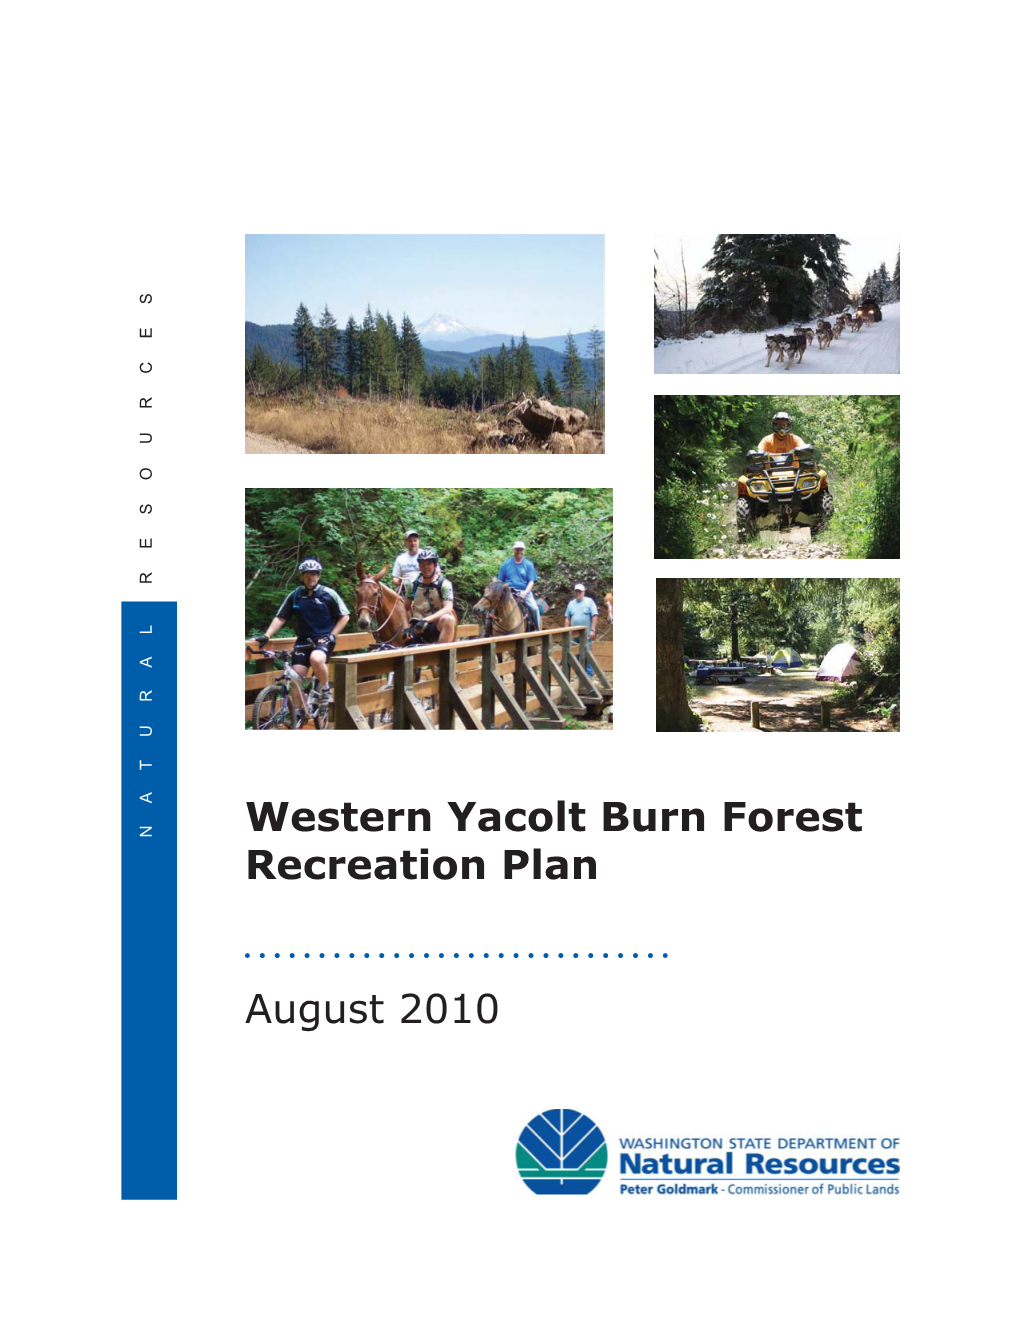 Western Yacolt Burn Forest Recreation Plan August 2010